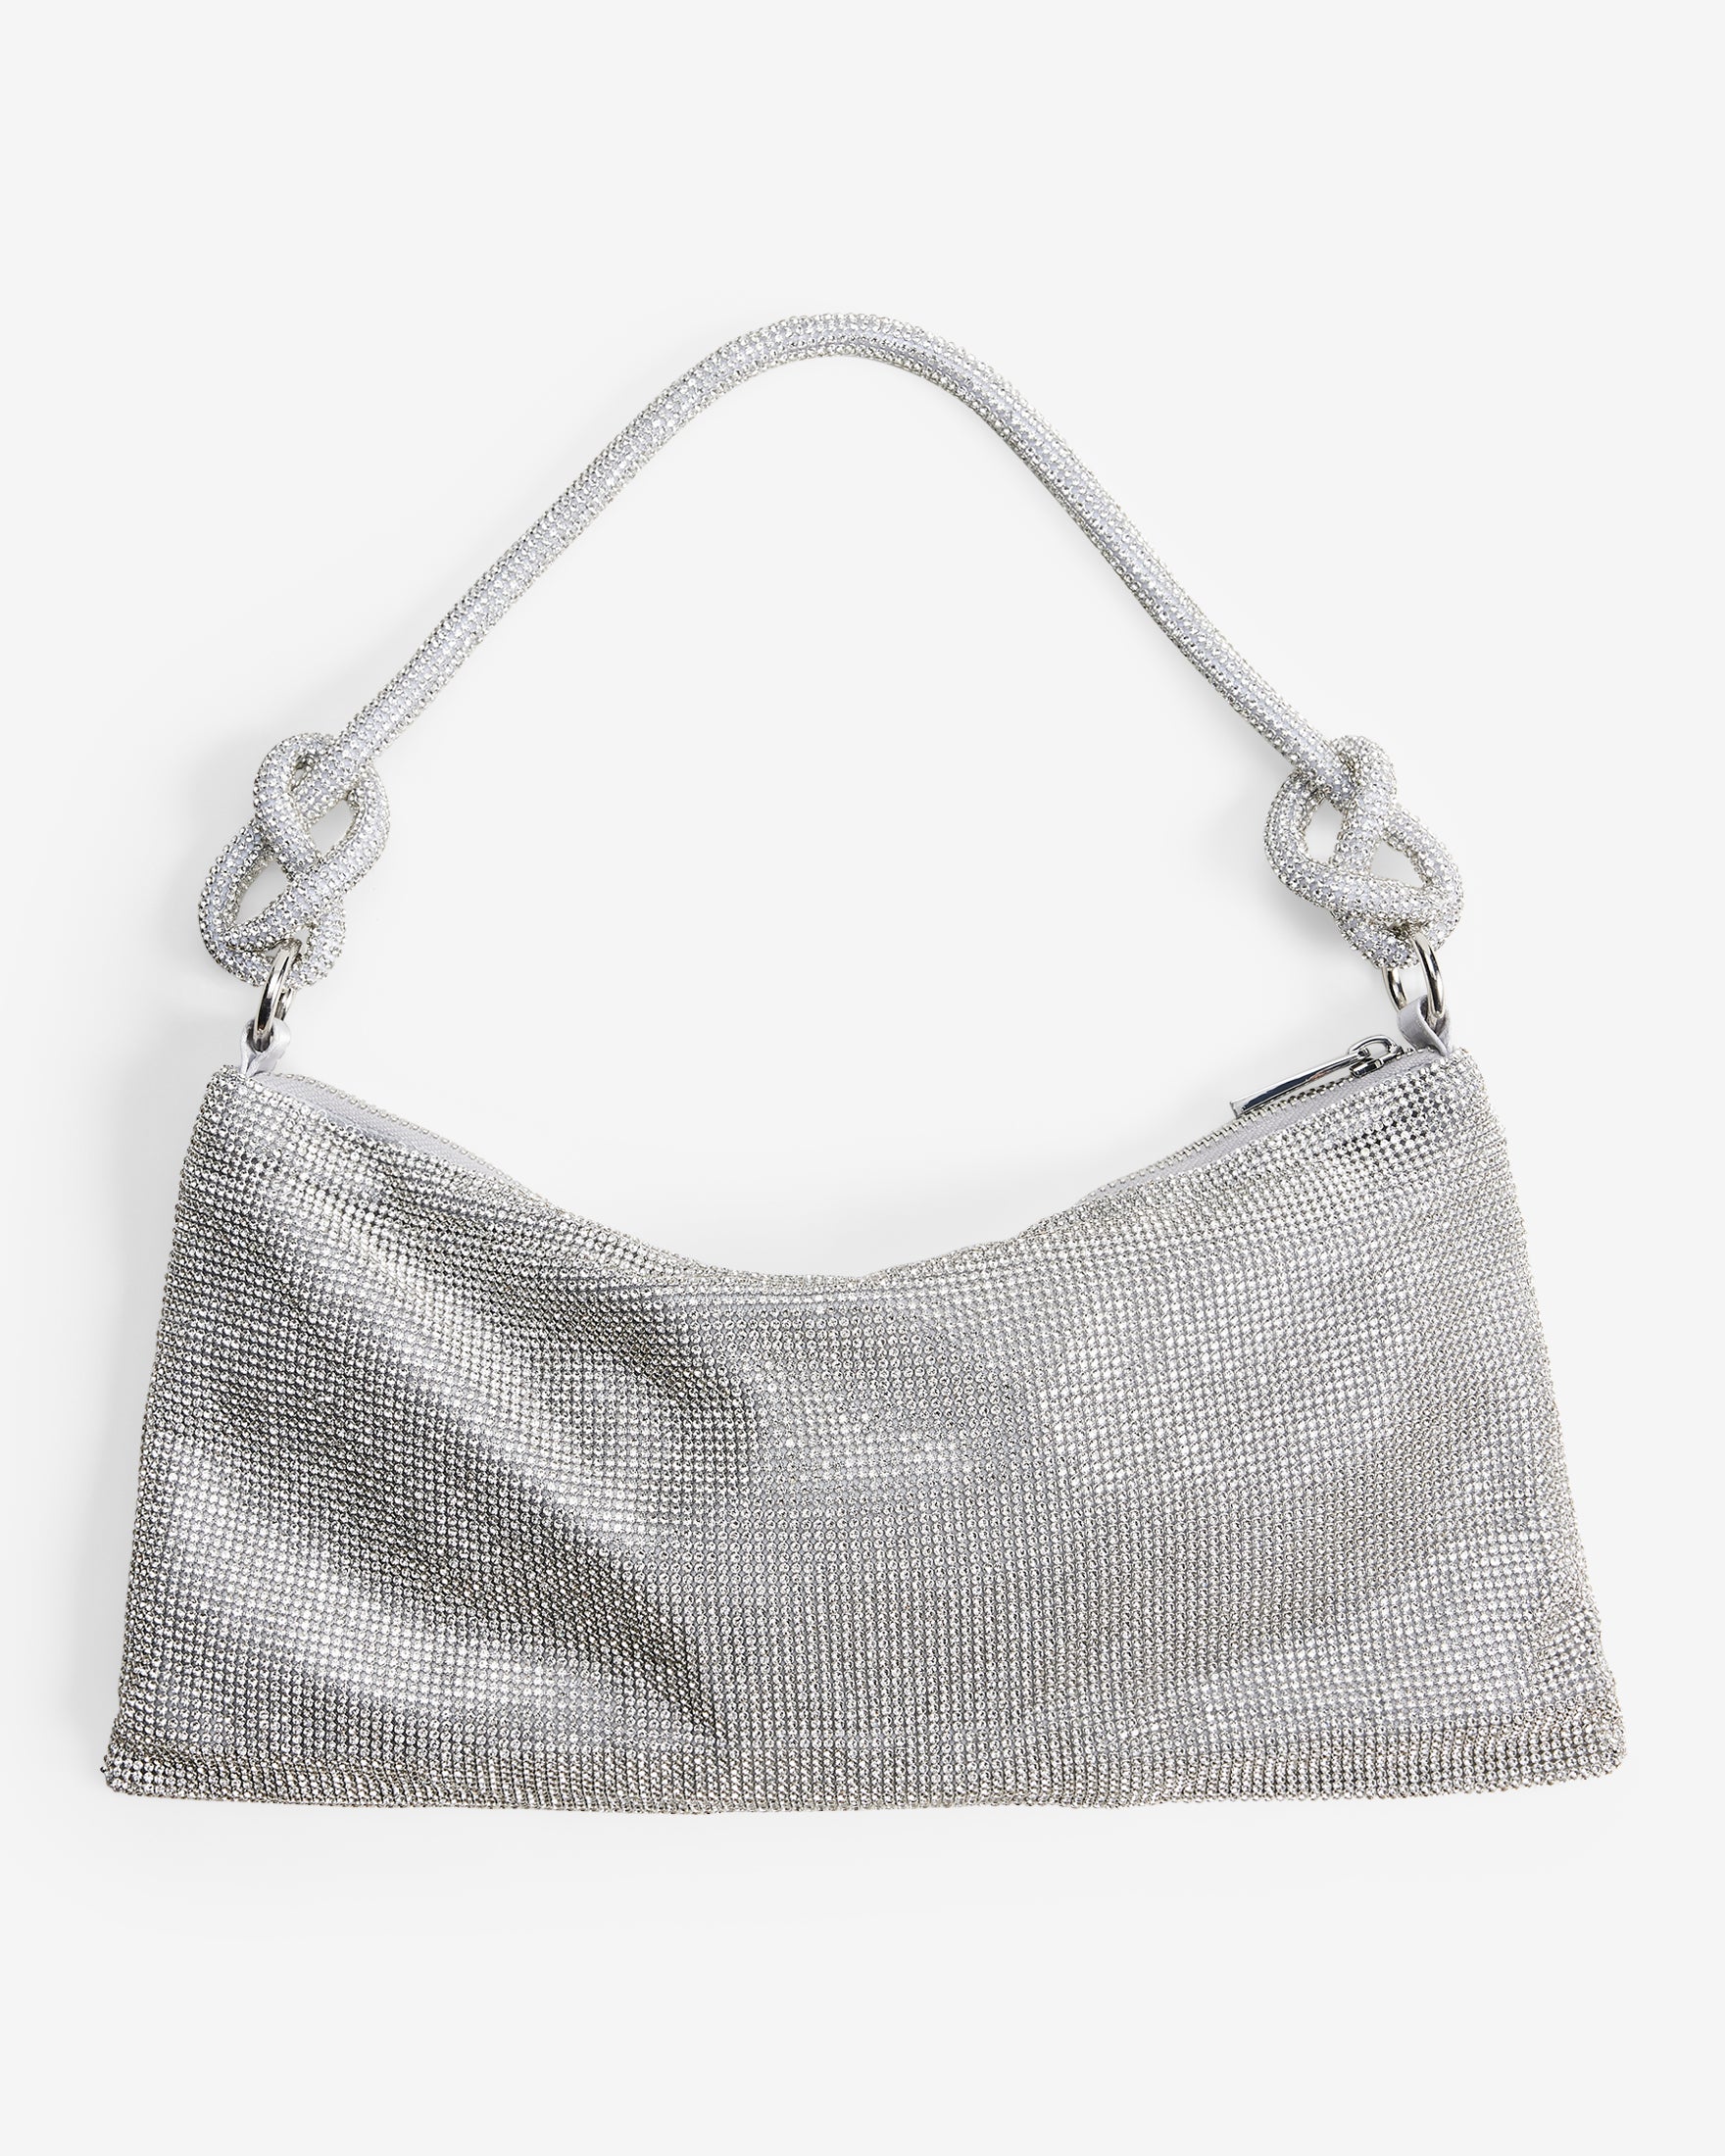 Sparkly silver purse